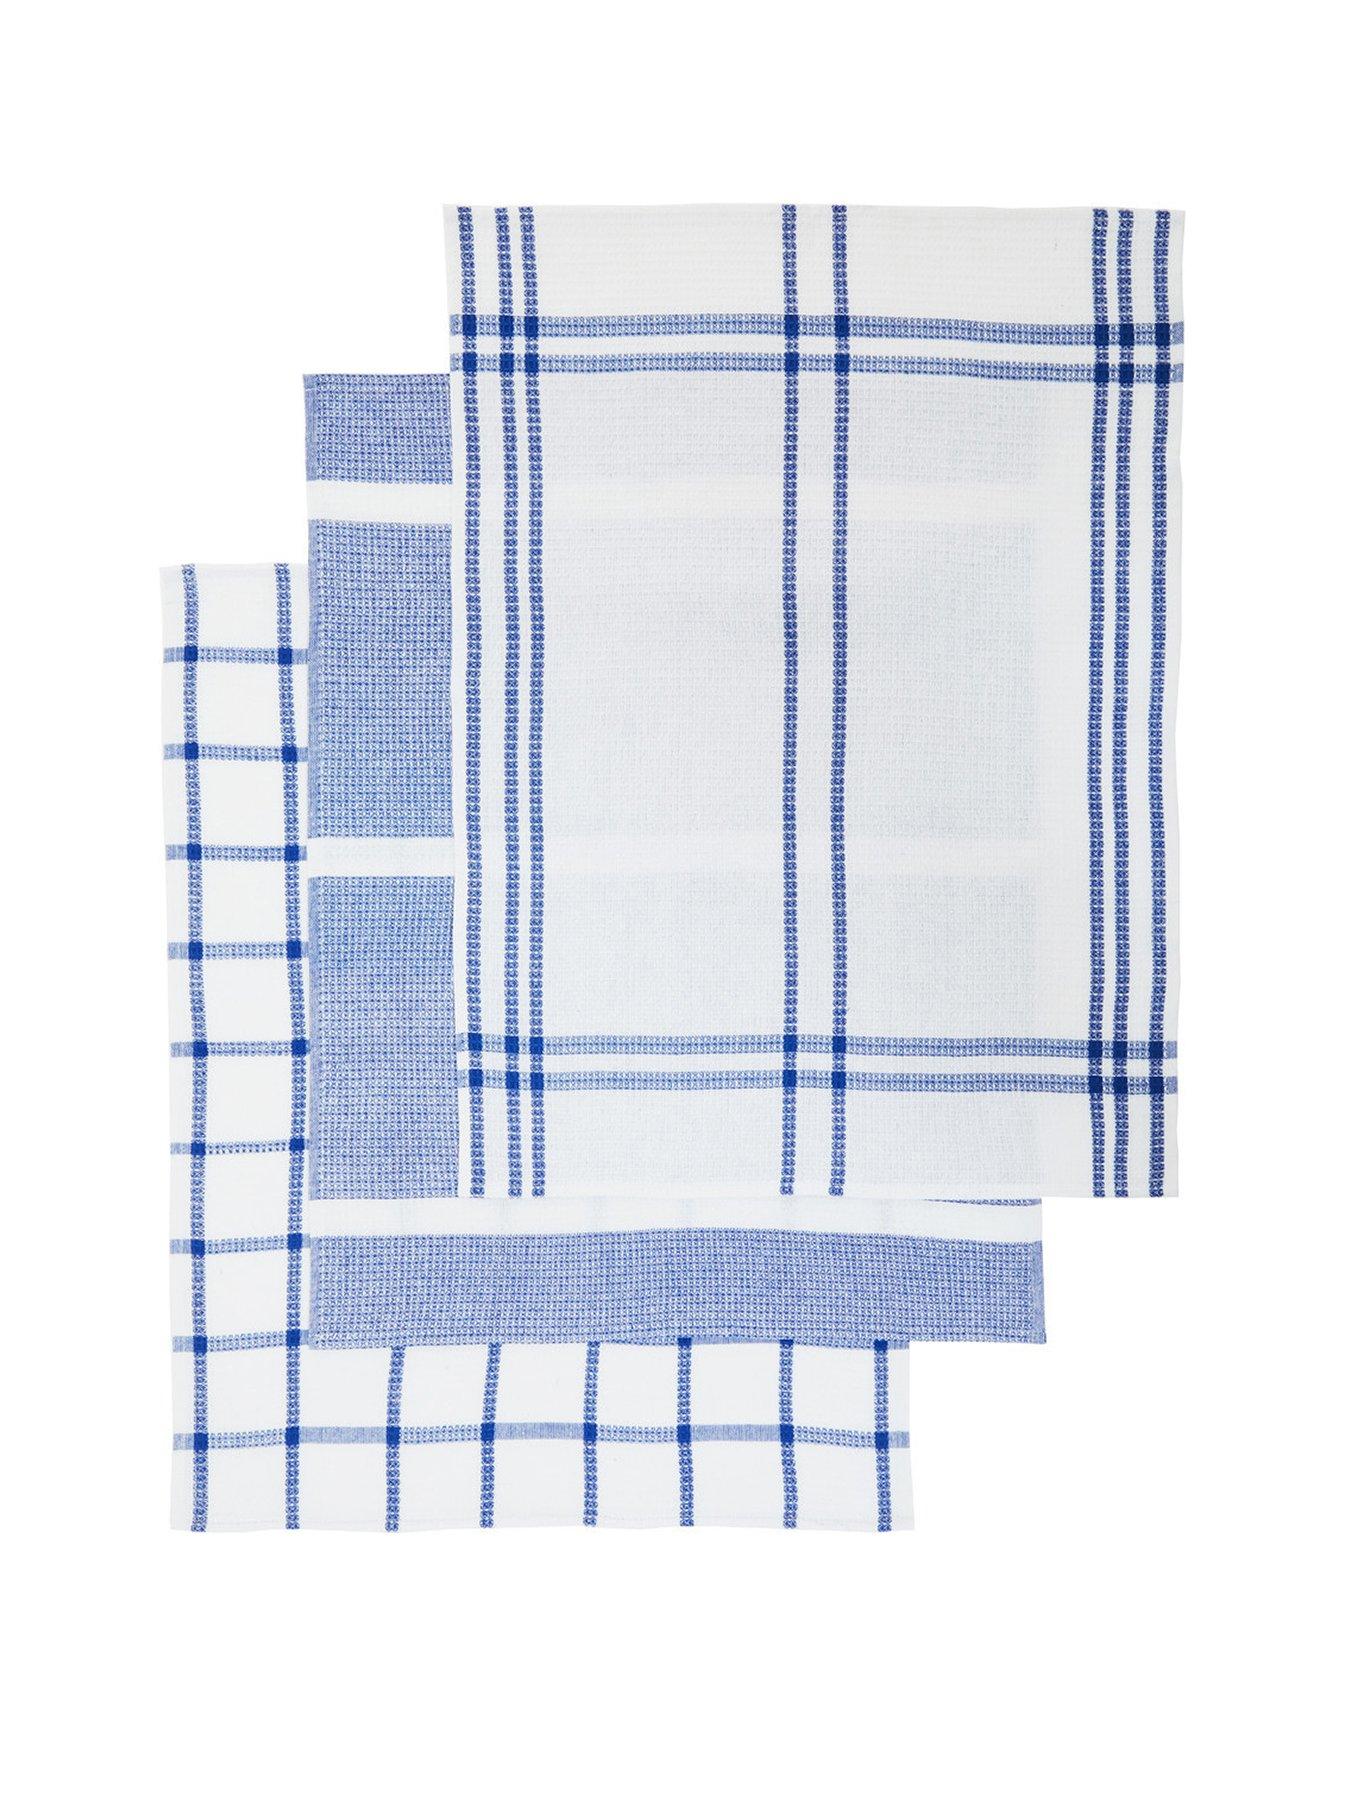 6 Pack of Premier Kitchen Towels: 15 x 25, Cotton, Striped Pattern, Color Options, Size: Case of 144, Blue